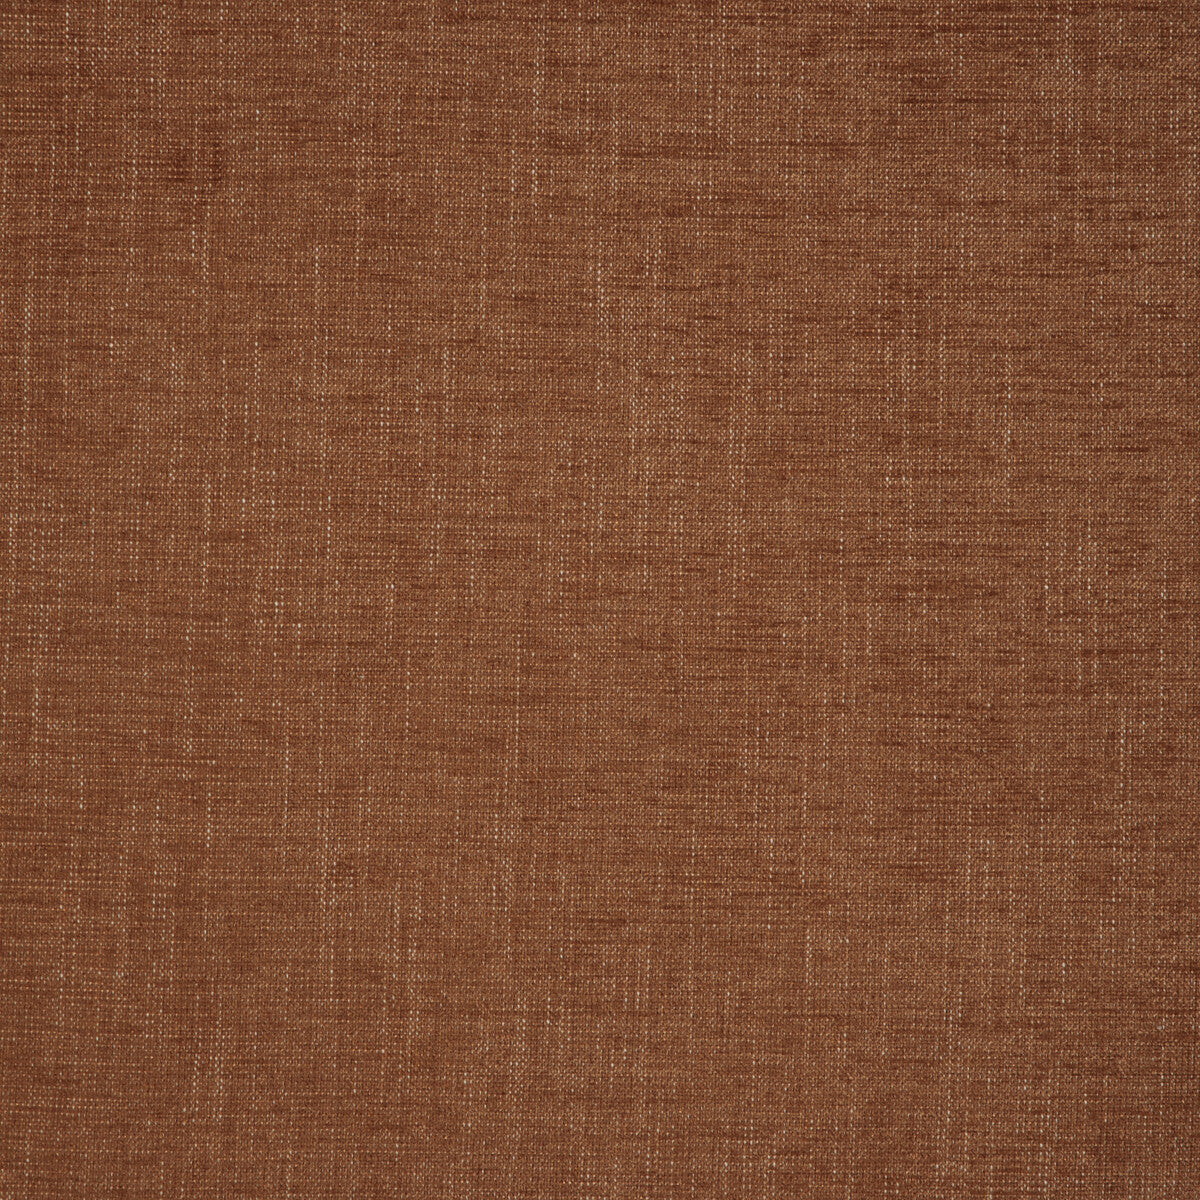 Poet Plain fabric in rust color - pattern 36649.24.0 - by Kravet Basics